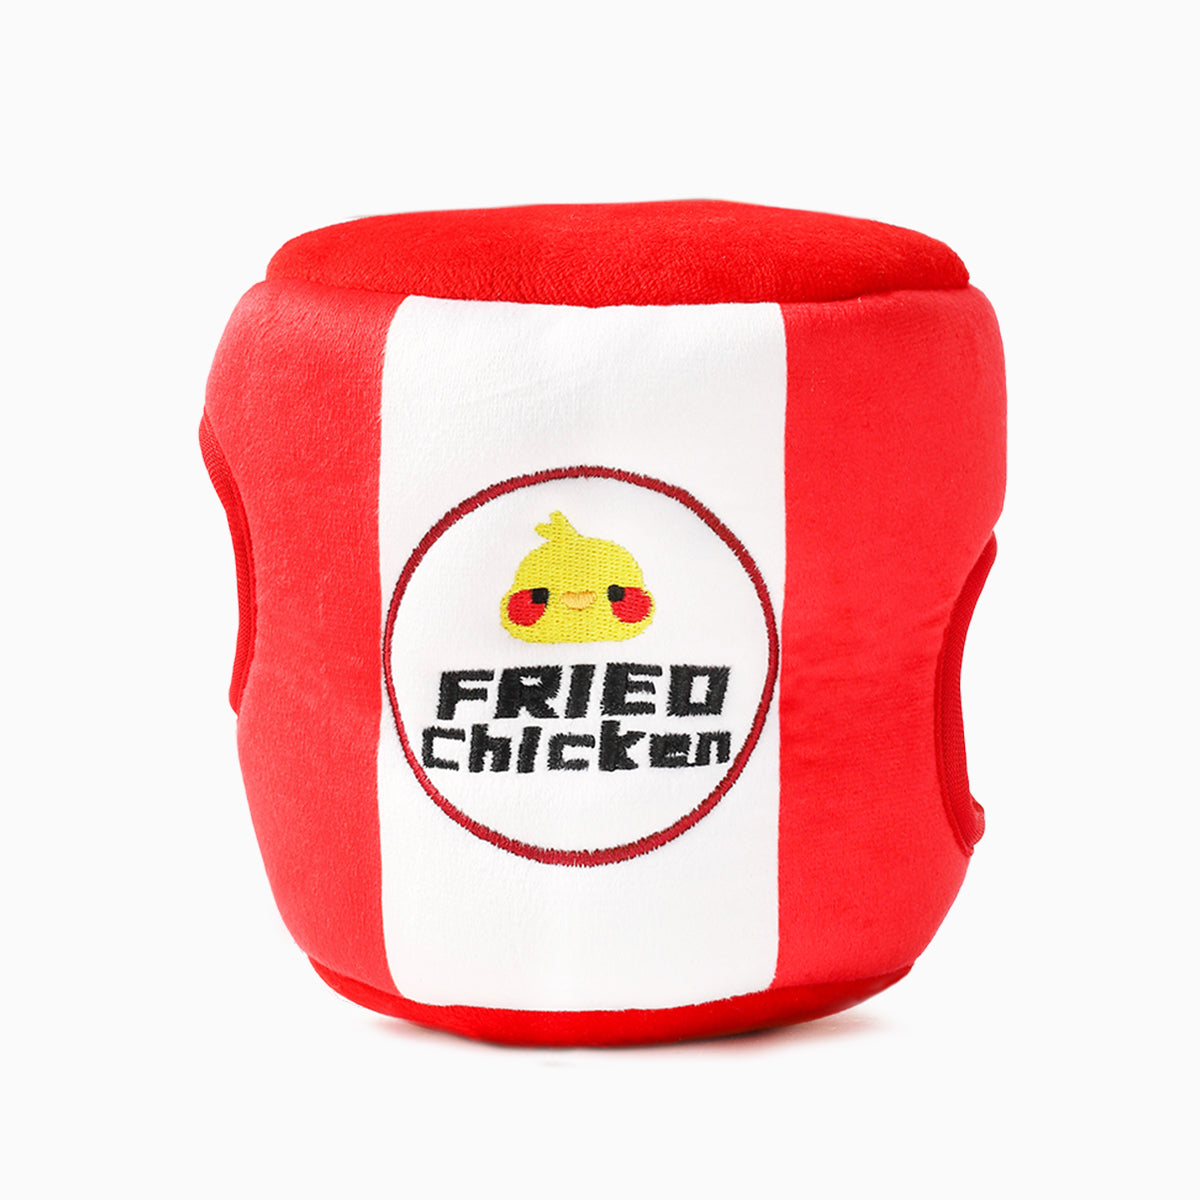 Fried Chicken Interactive Toy